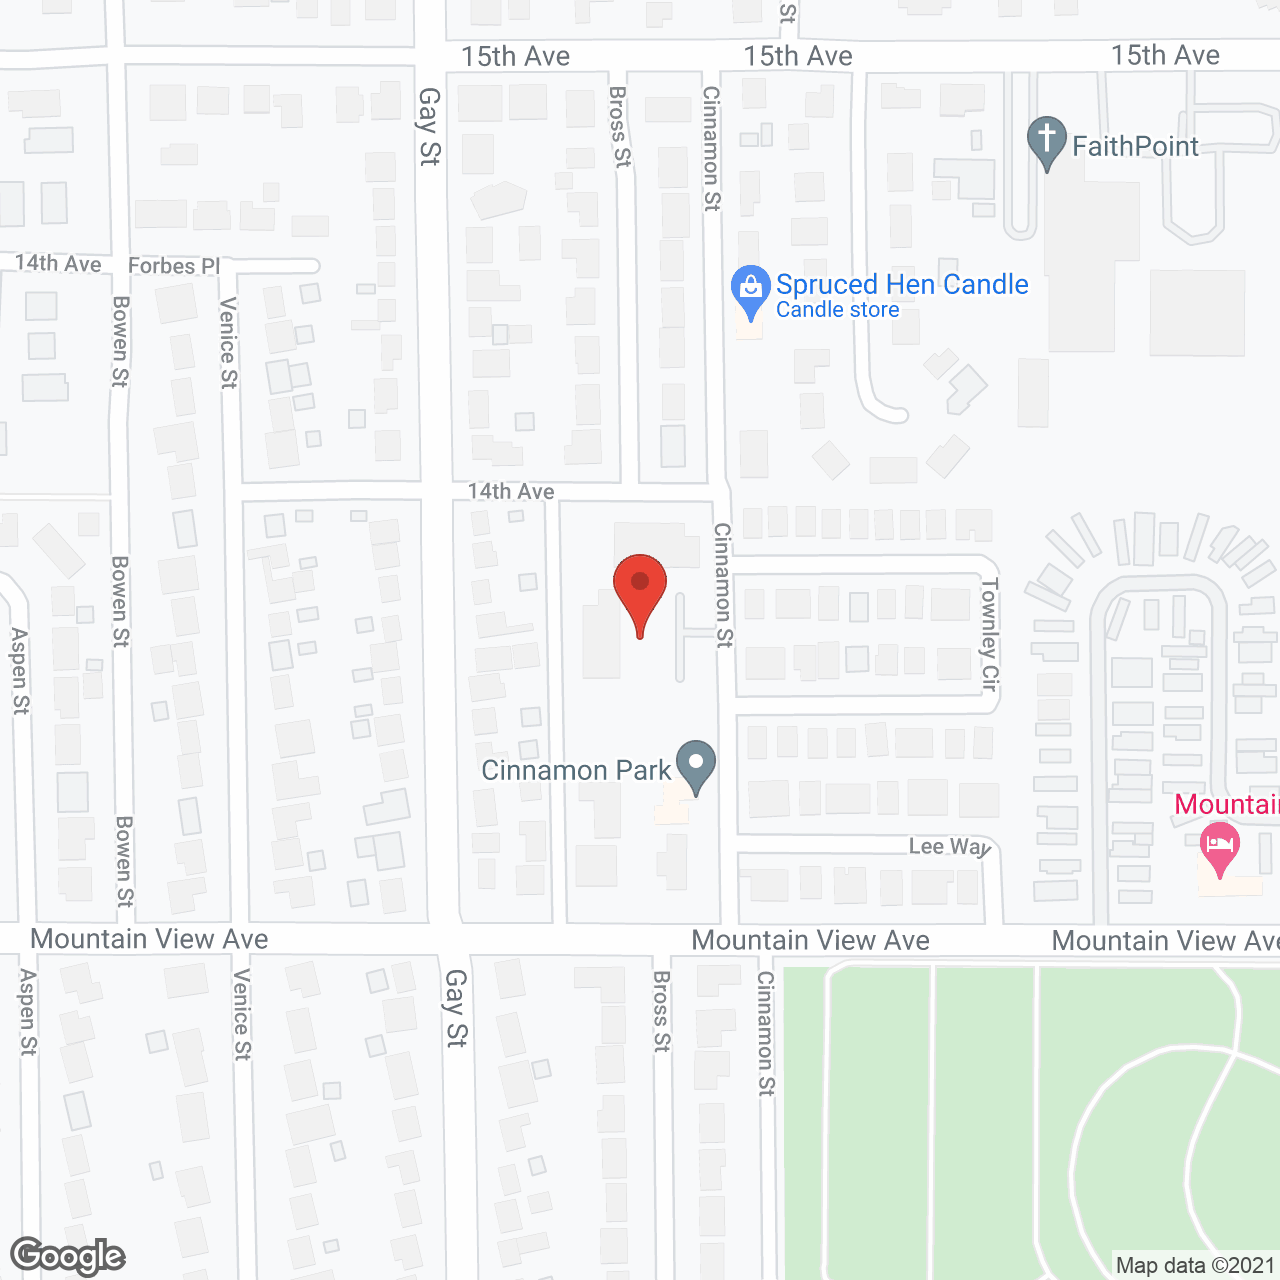 Cinnamon Park in google map